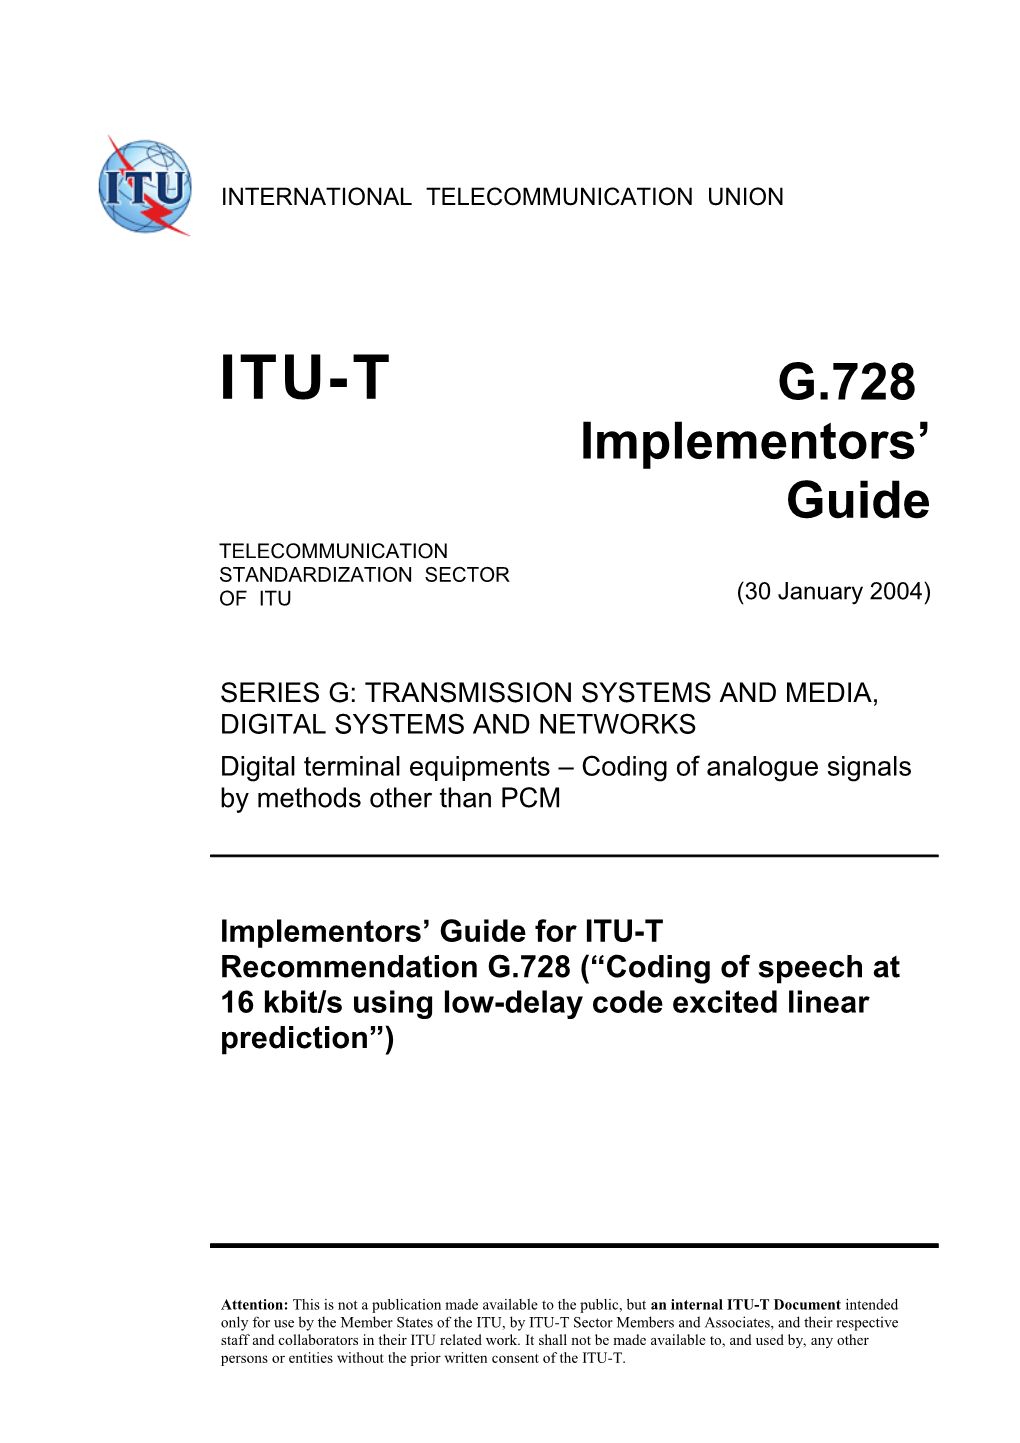 Implementors Guide for ITU-T G.728 (2004-01)1